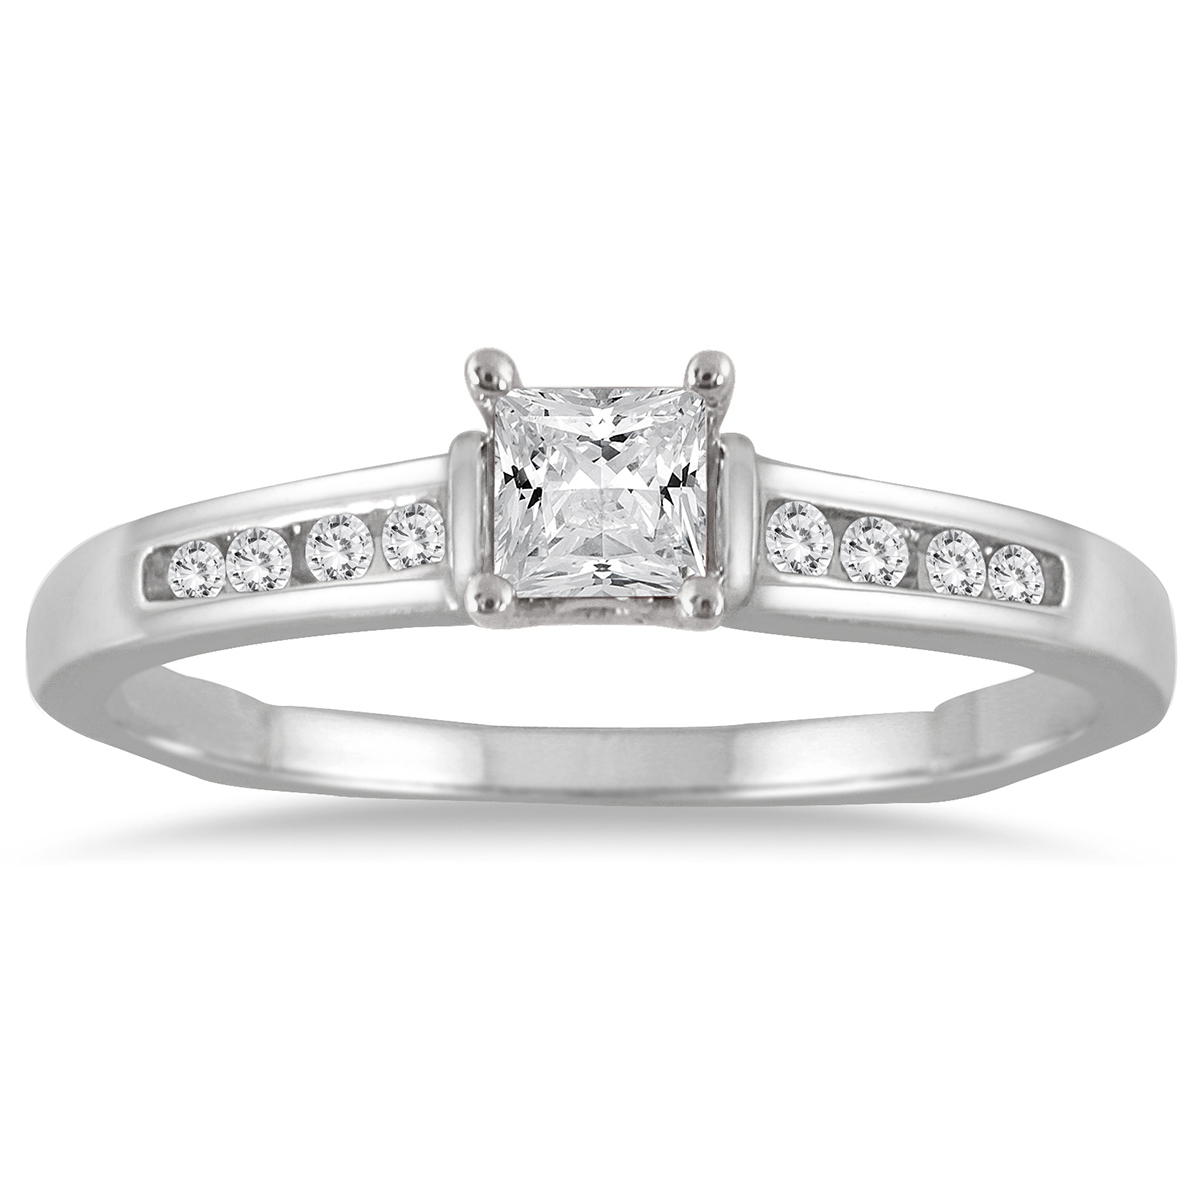 szul.com 1/3 Carat TW Princess Cut Diamond Ring in 14K White Gold